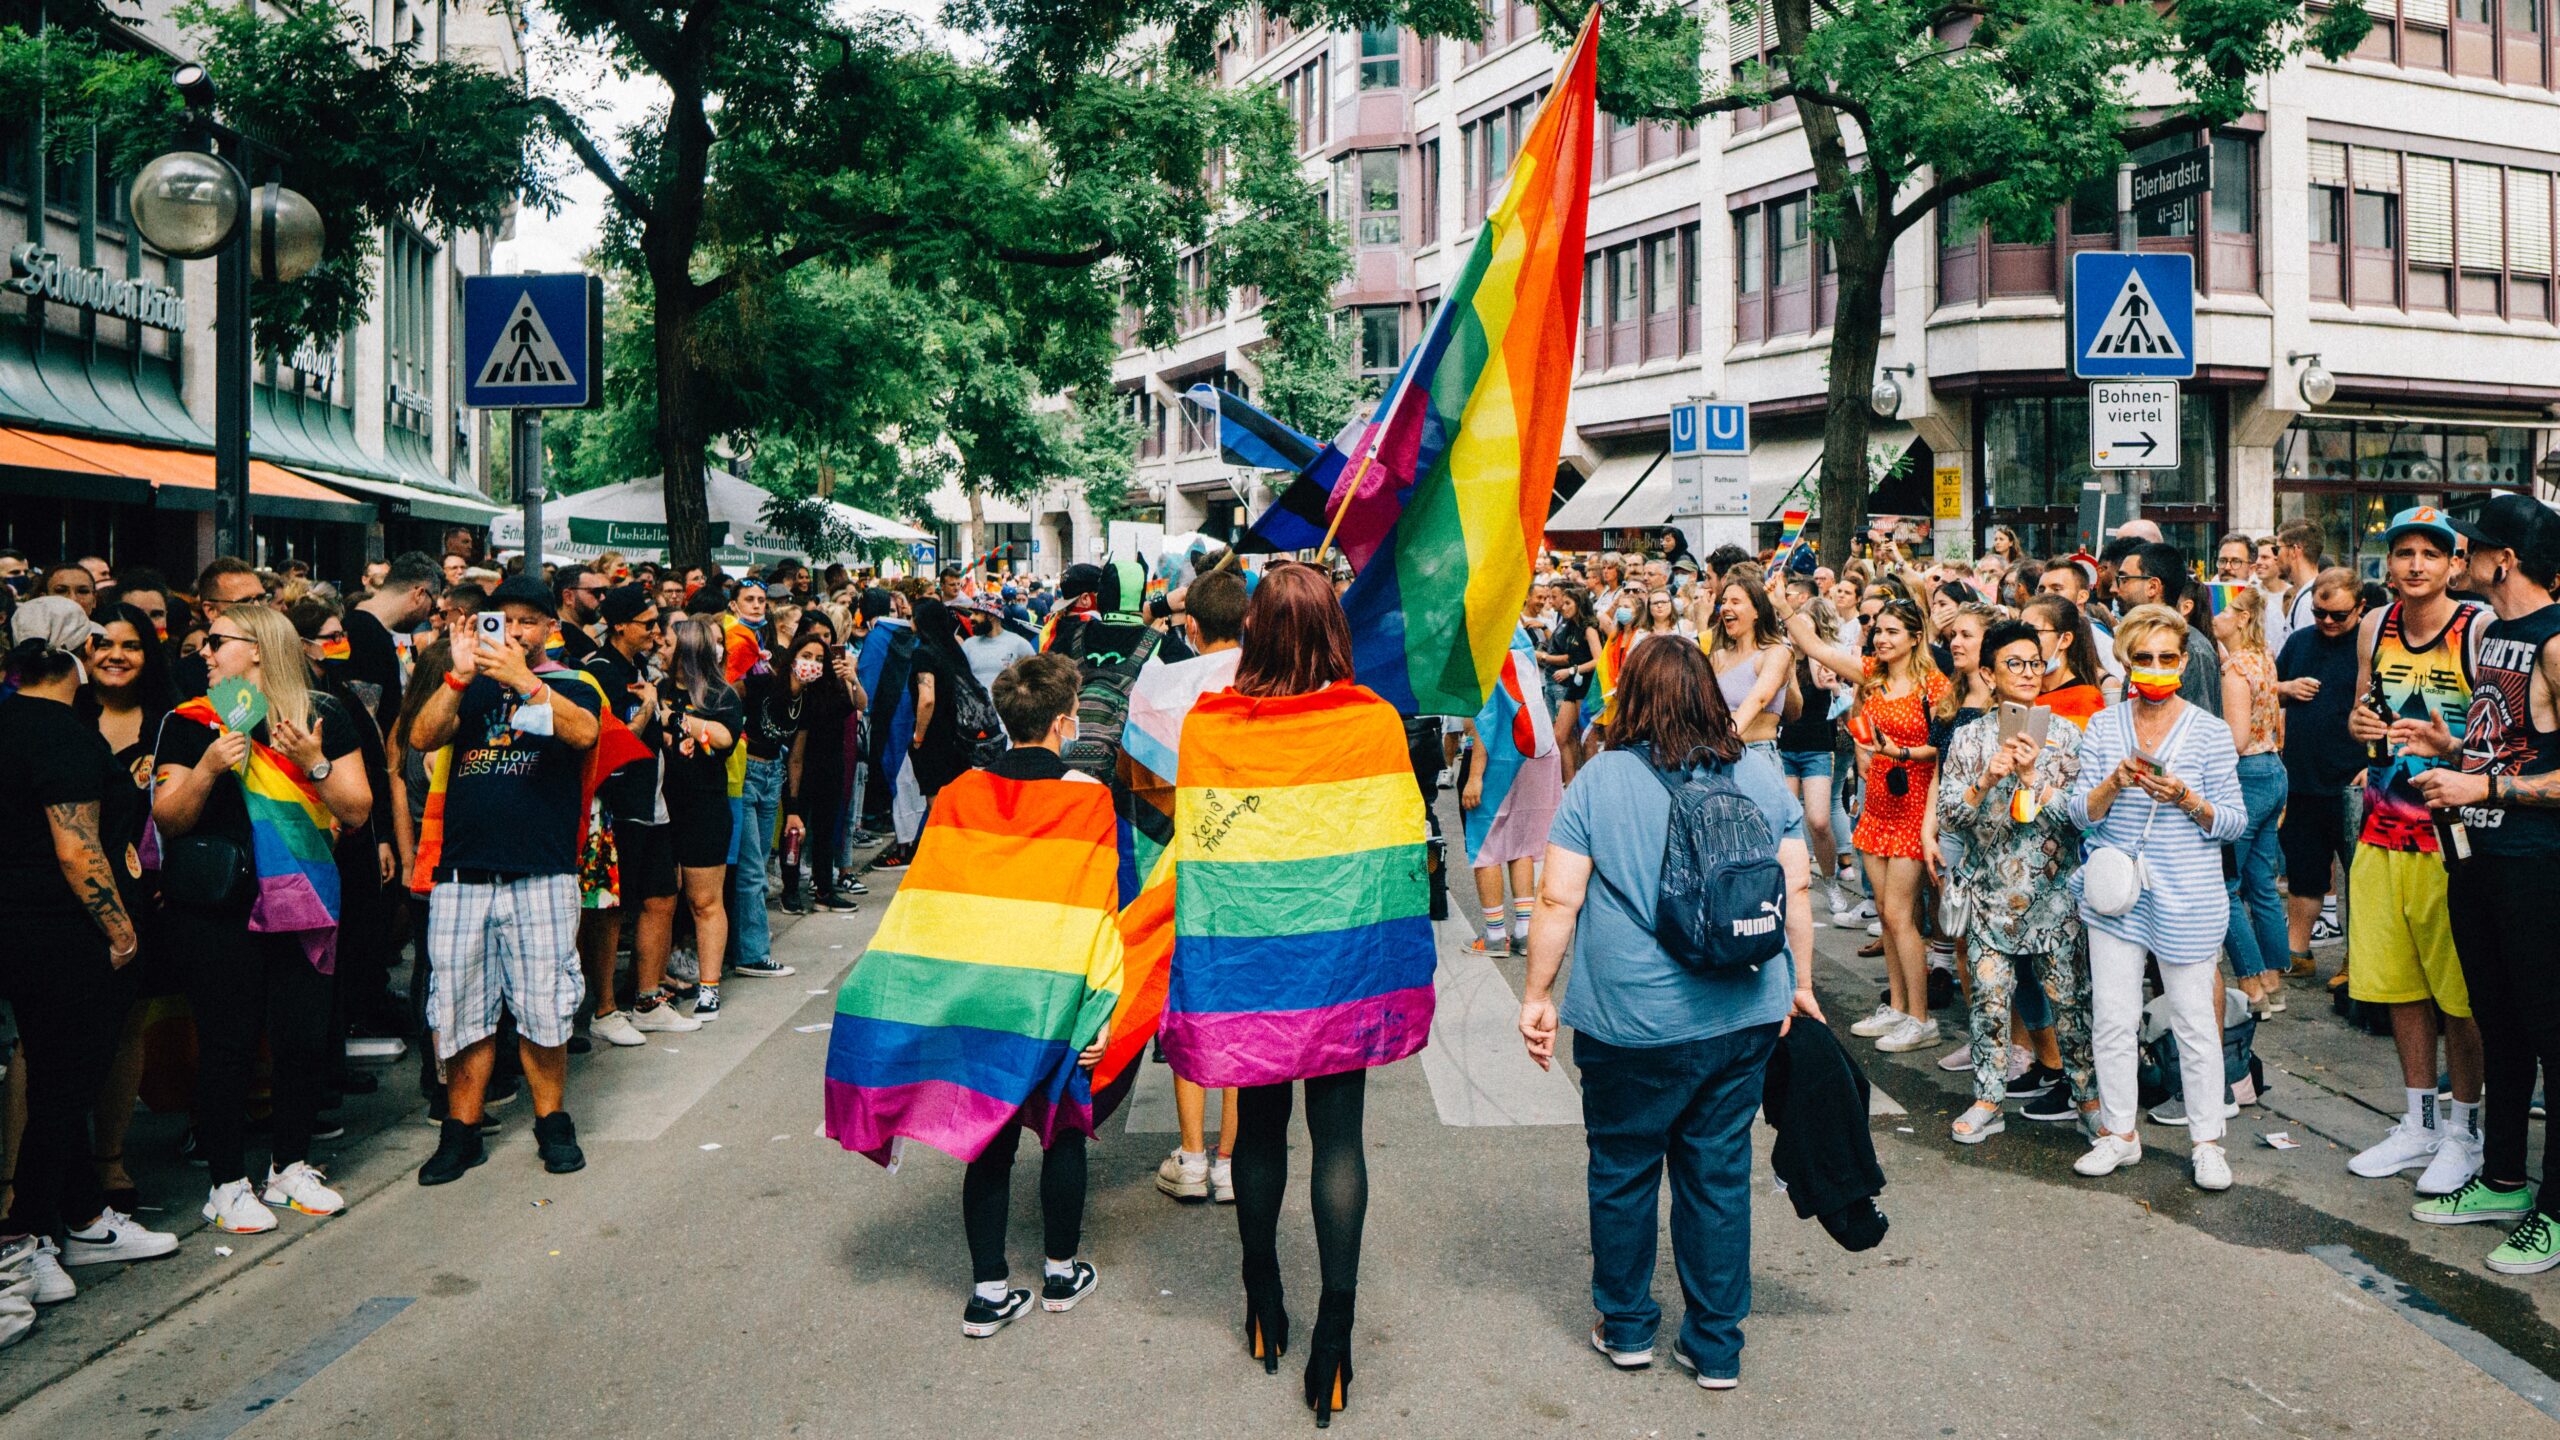 Pride parade scene